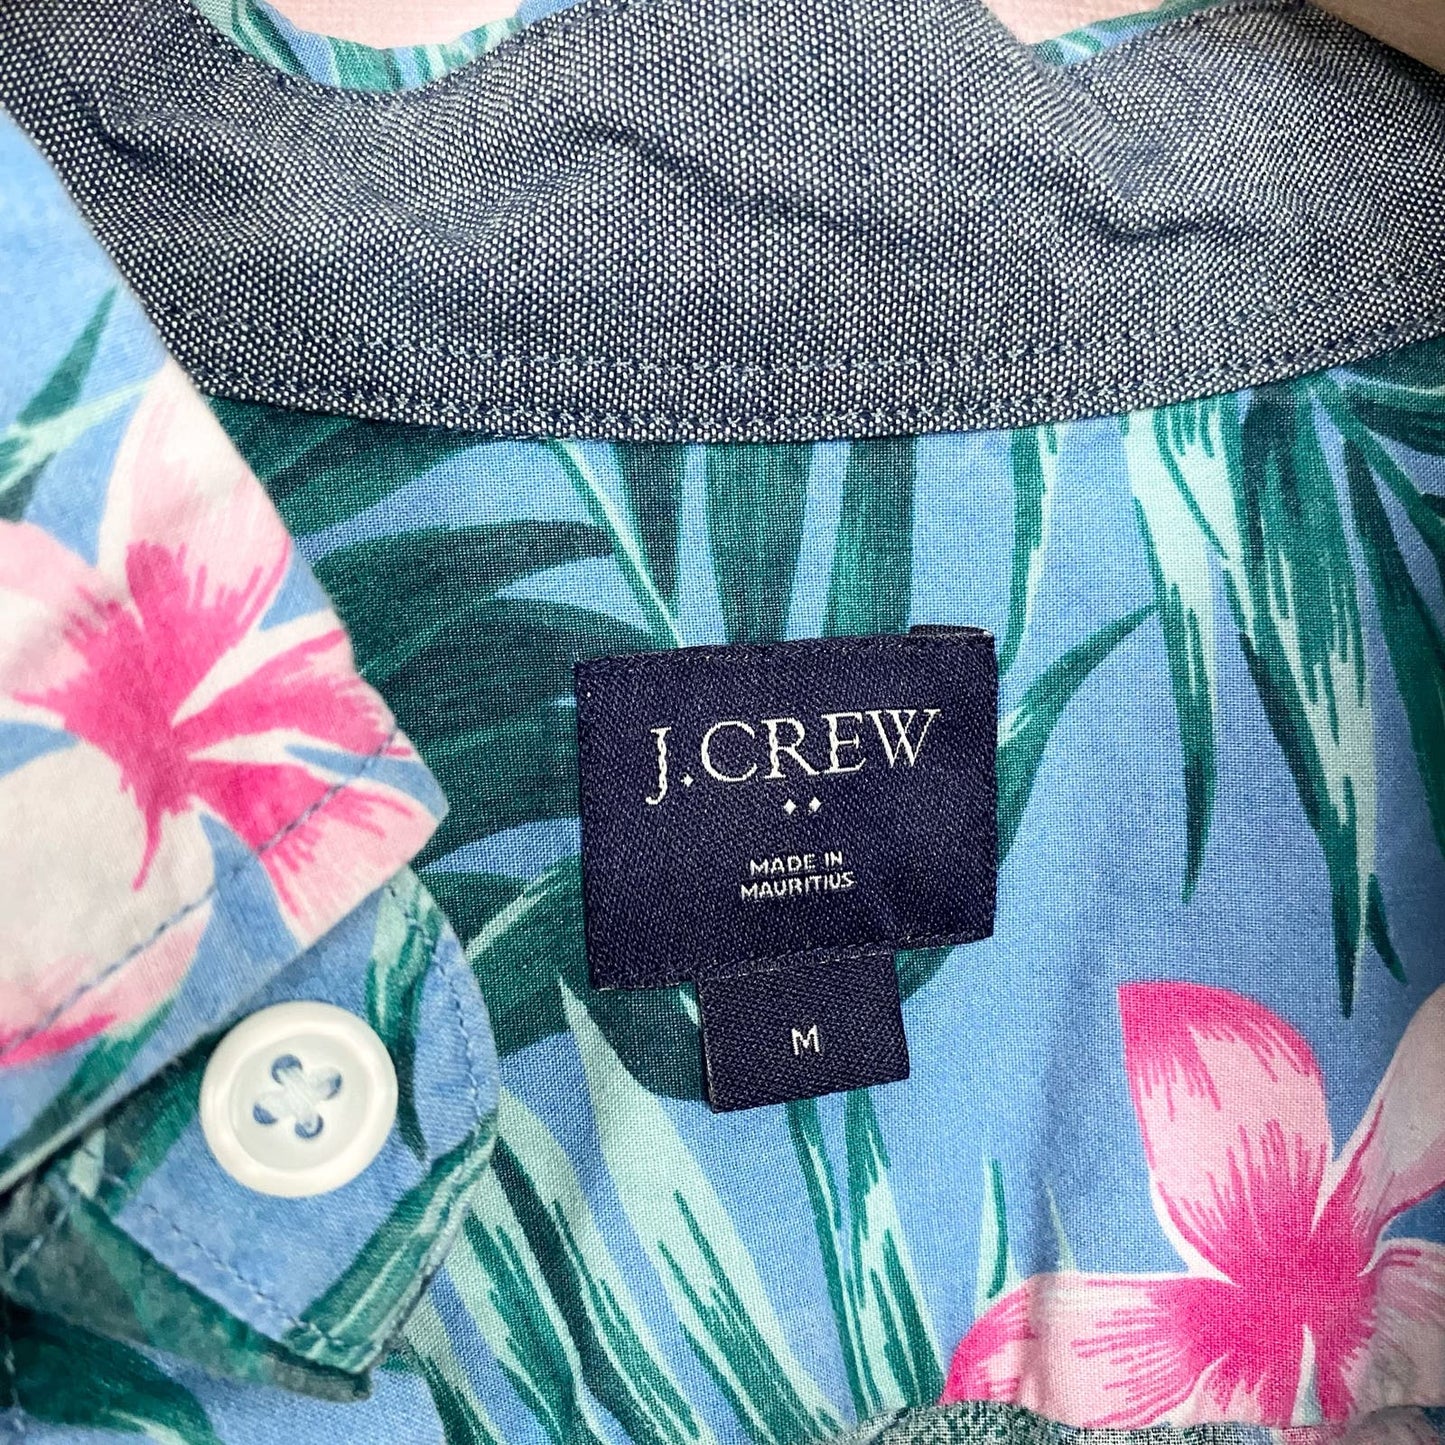 Secondhand J.Crew Tropical Hawaiian Short Sleeve Button Up Shirt, Size Medium